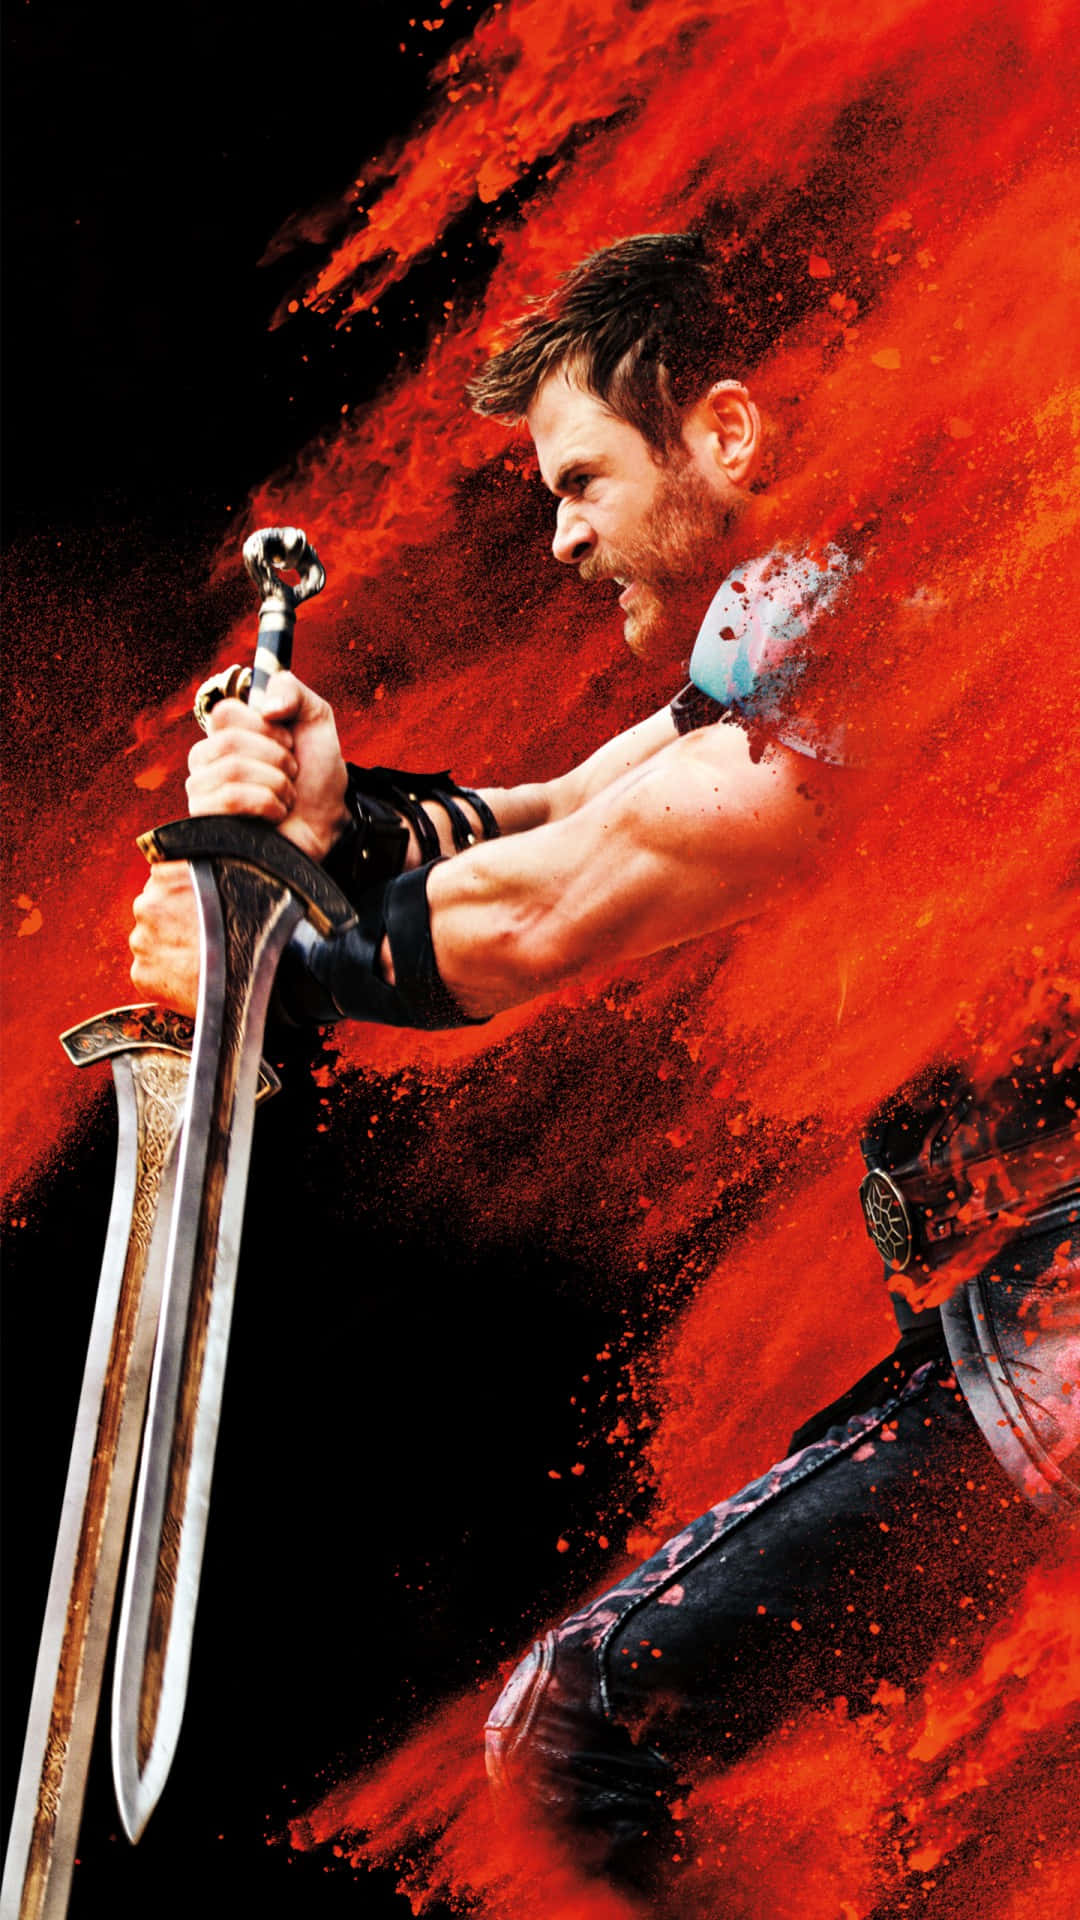 Chris Hemsworth As The Mighty Thor in Thor Ragnarok Wallpaper